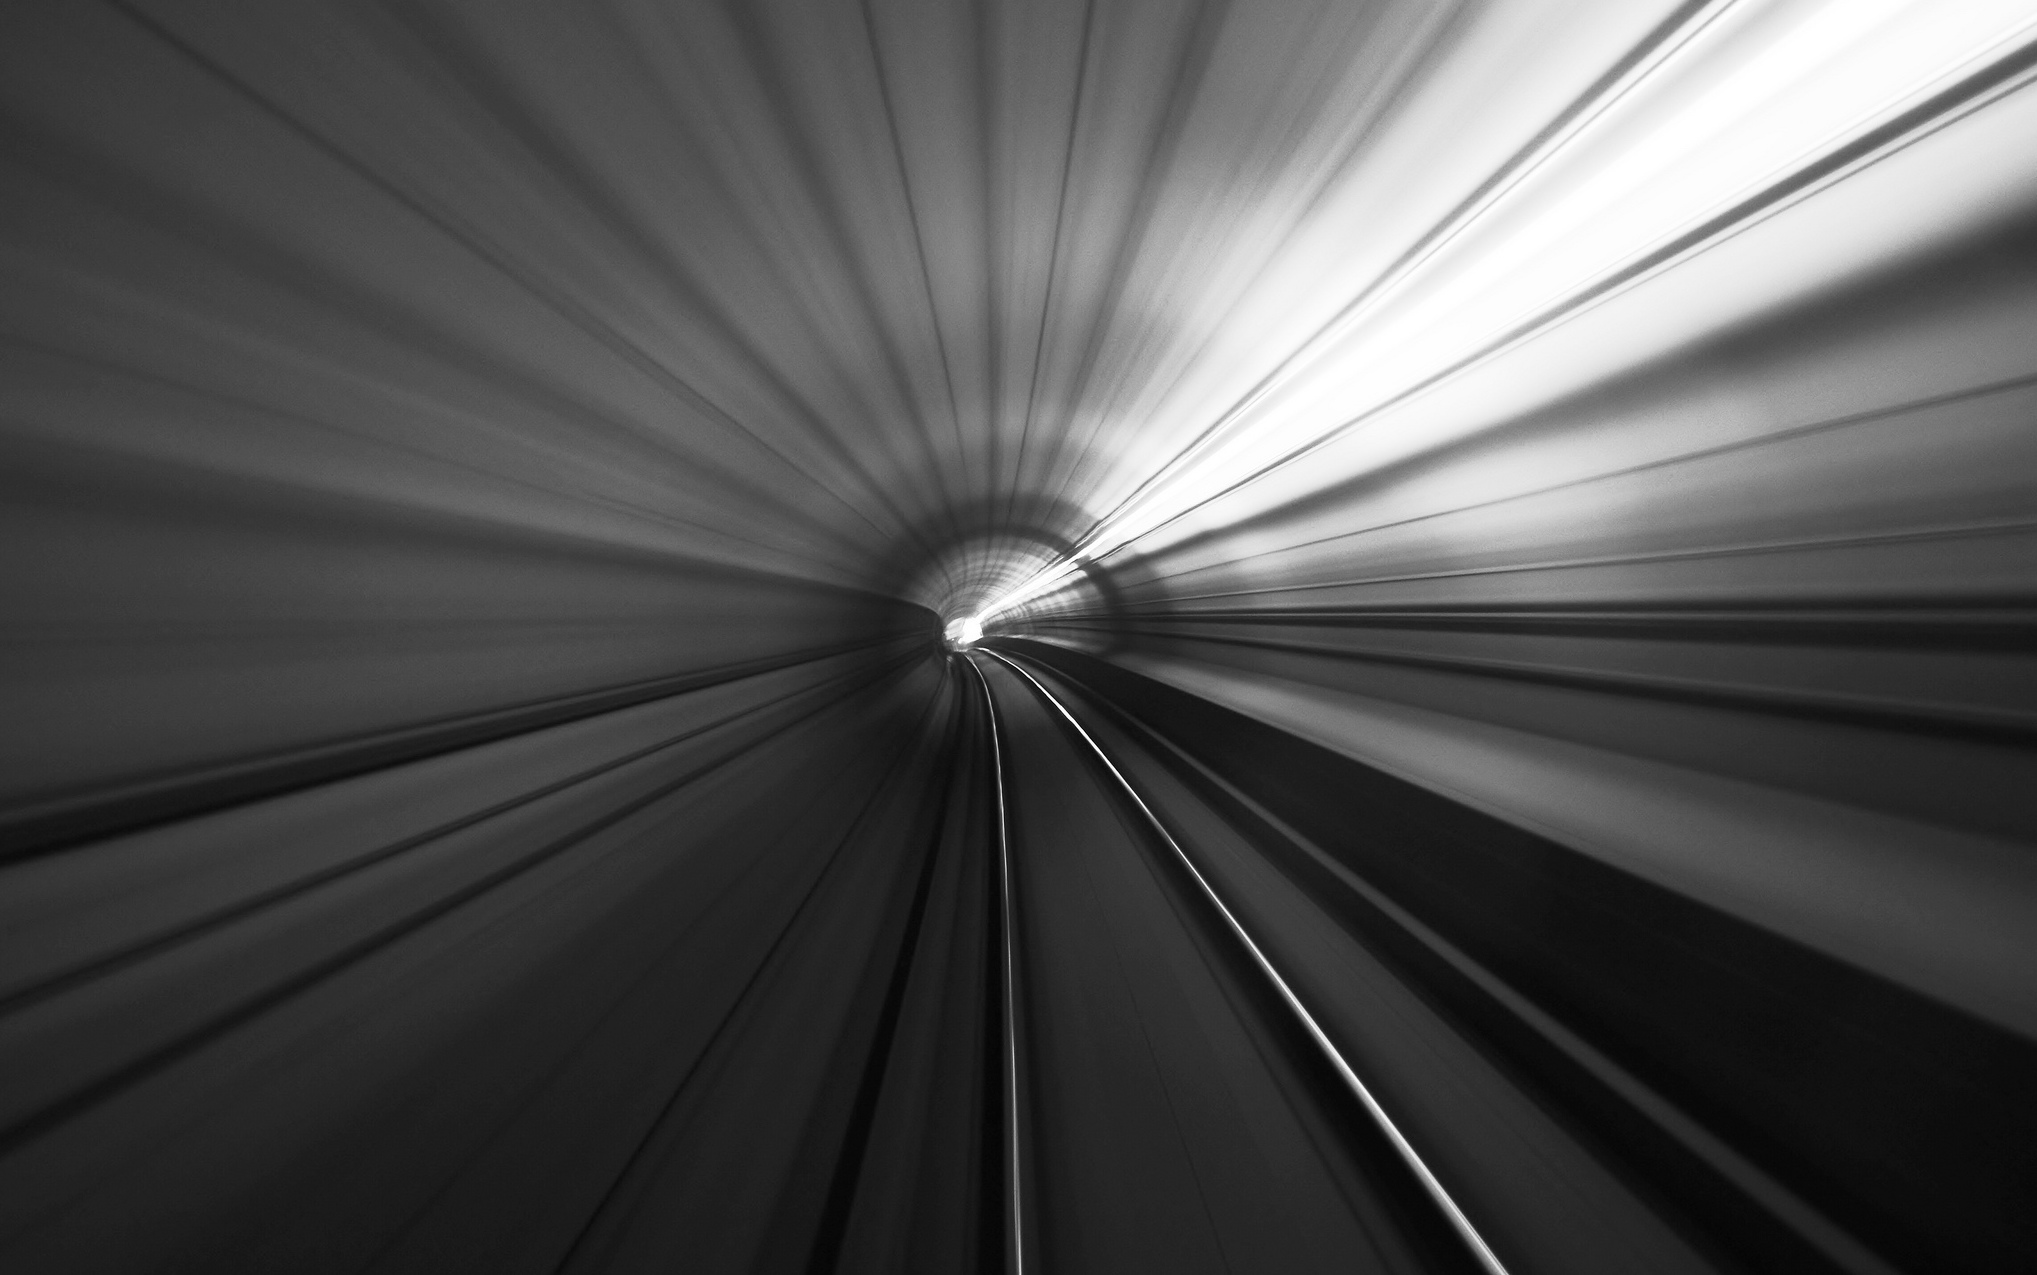  Tunnel Rush (Windows)